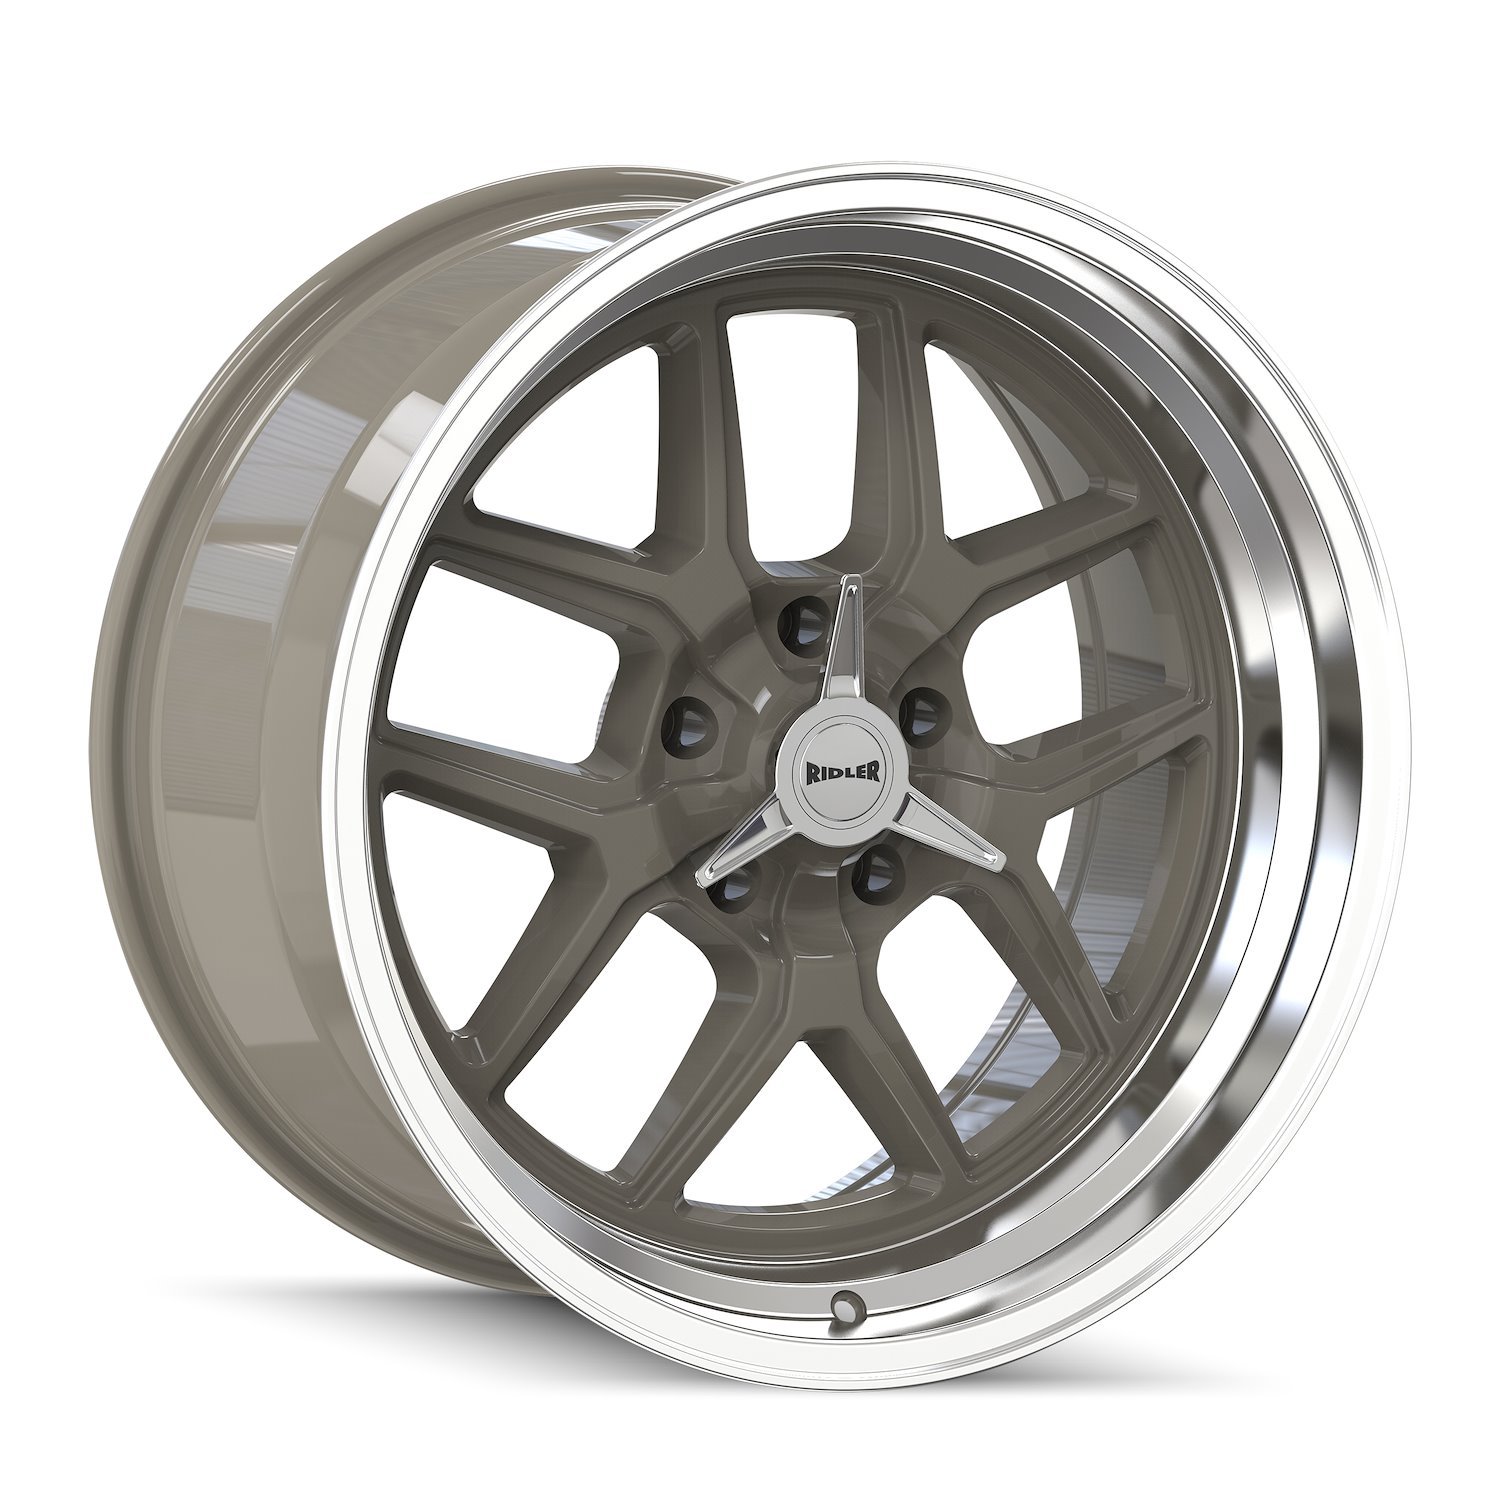 610-7861G 610-Series Wheel [Size: 17" x 8"] Gloss Grey Polished Finish